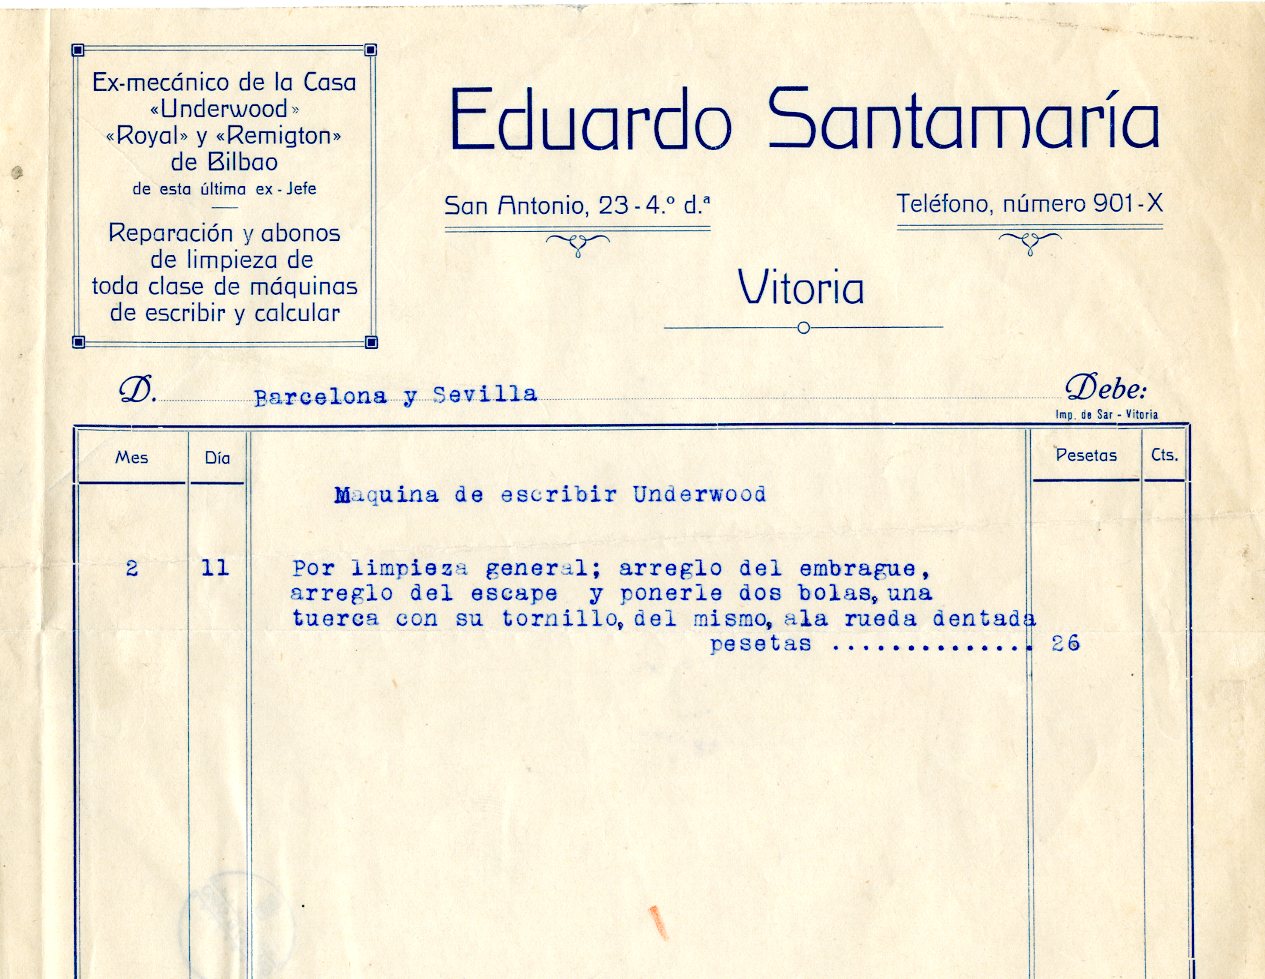 Eduardo Santamaría